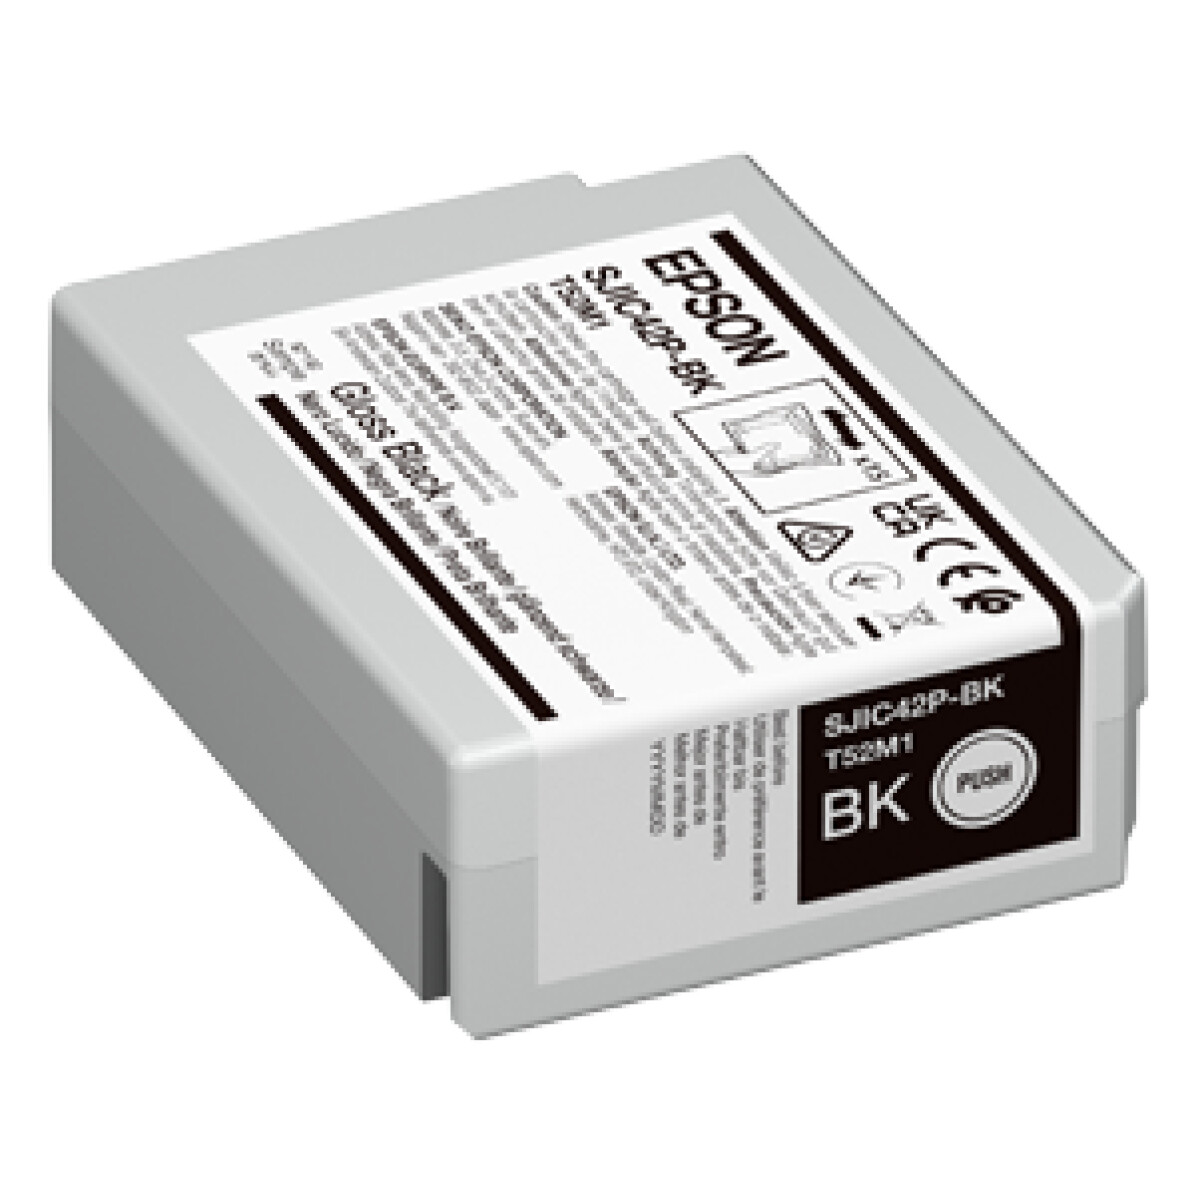 Epson - Printcartridge ColorWorks C4000 - SJIC42P-BK (Zwart)